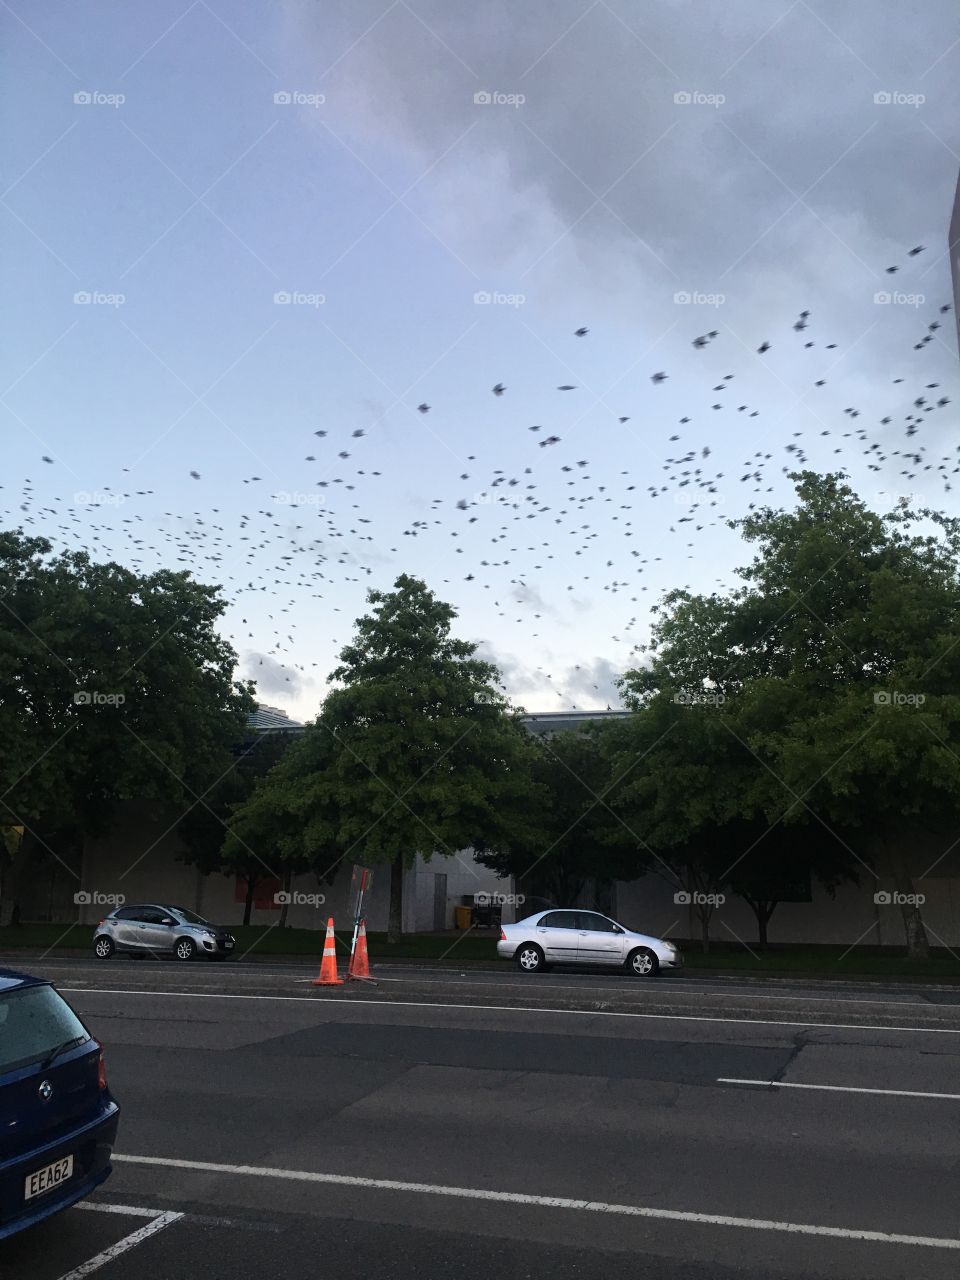 Tons of birds 🦅